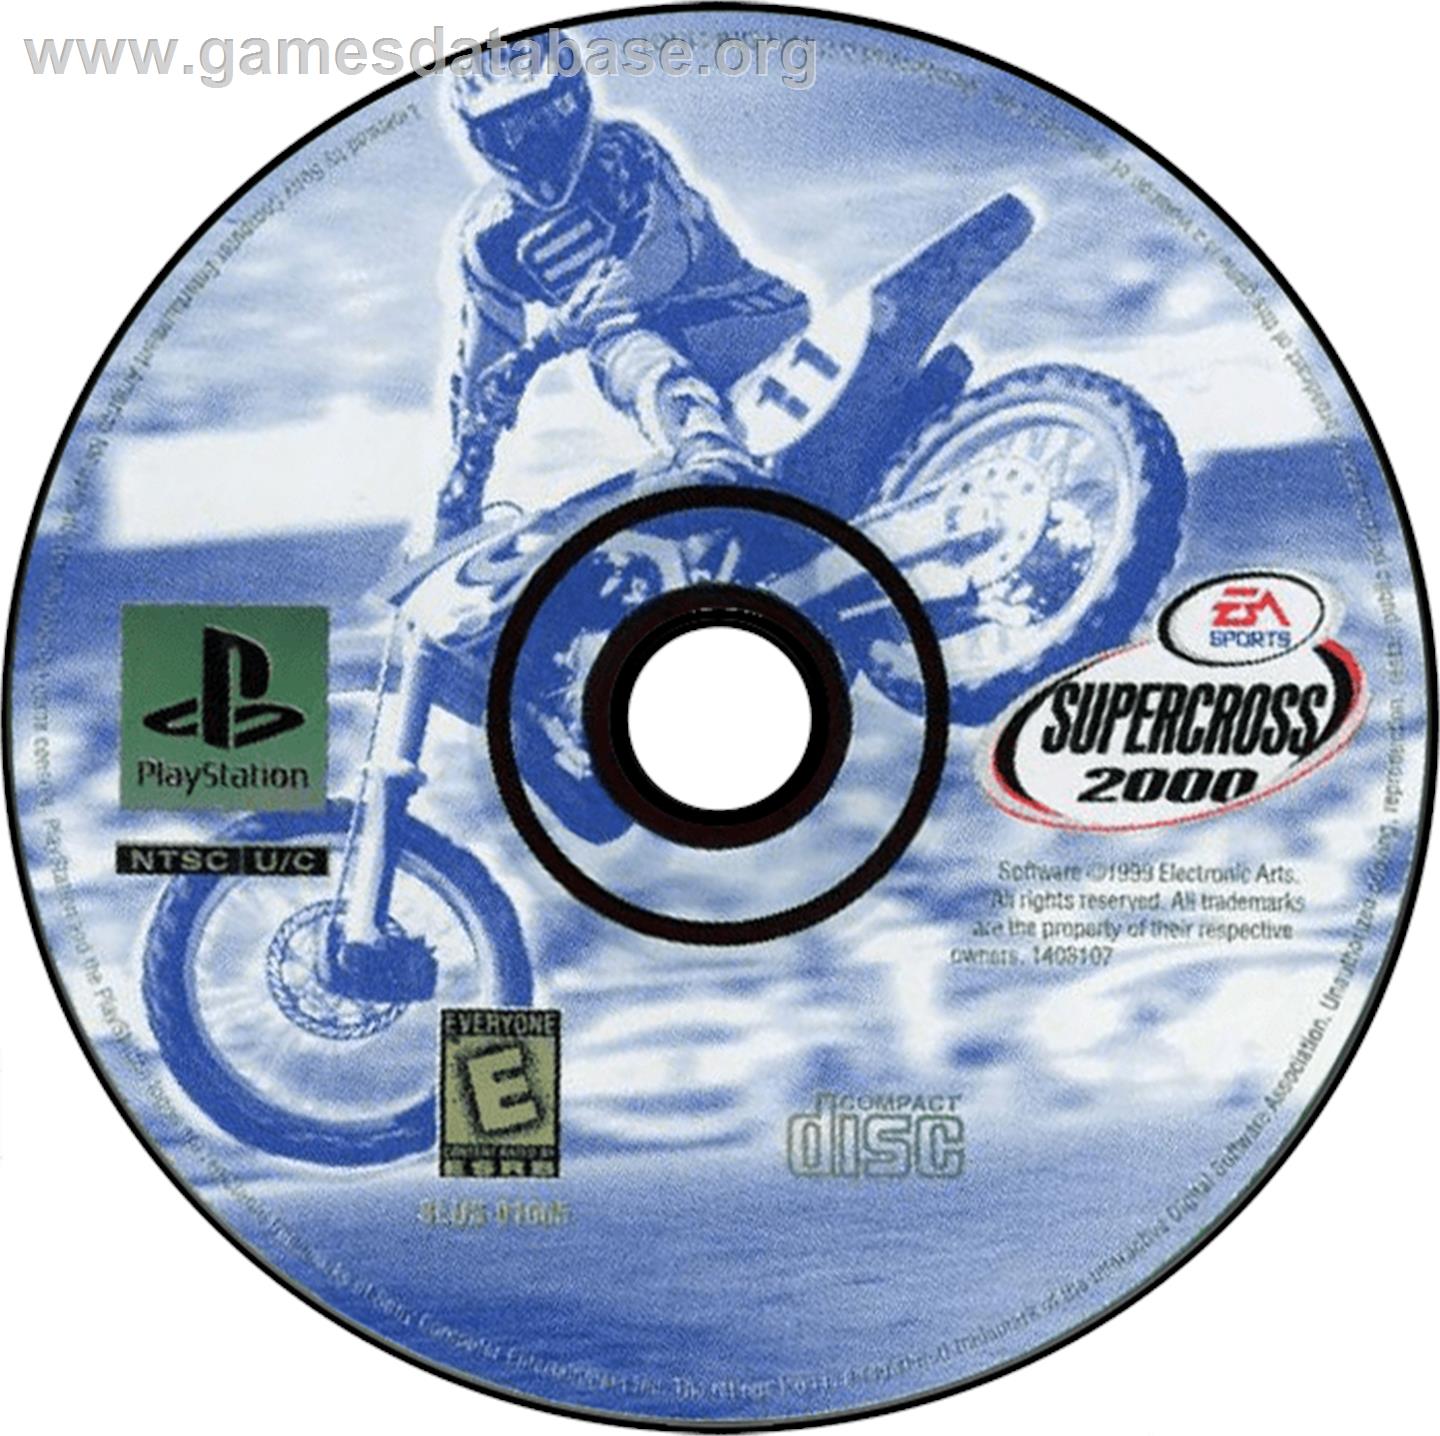 Supercross 2000 - Sony Playstation - Artwork - Disc